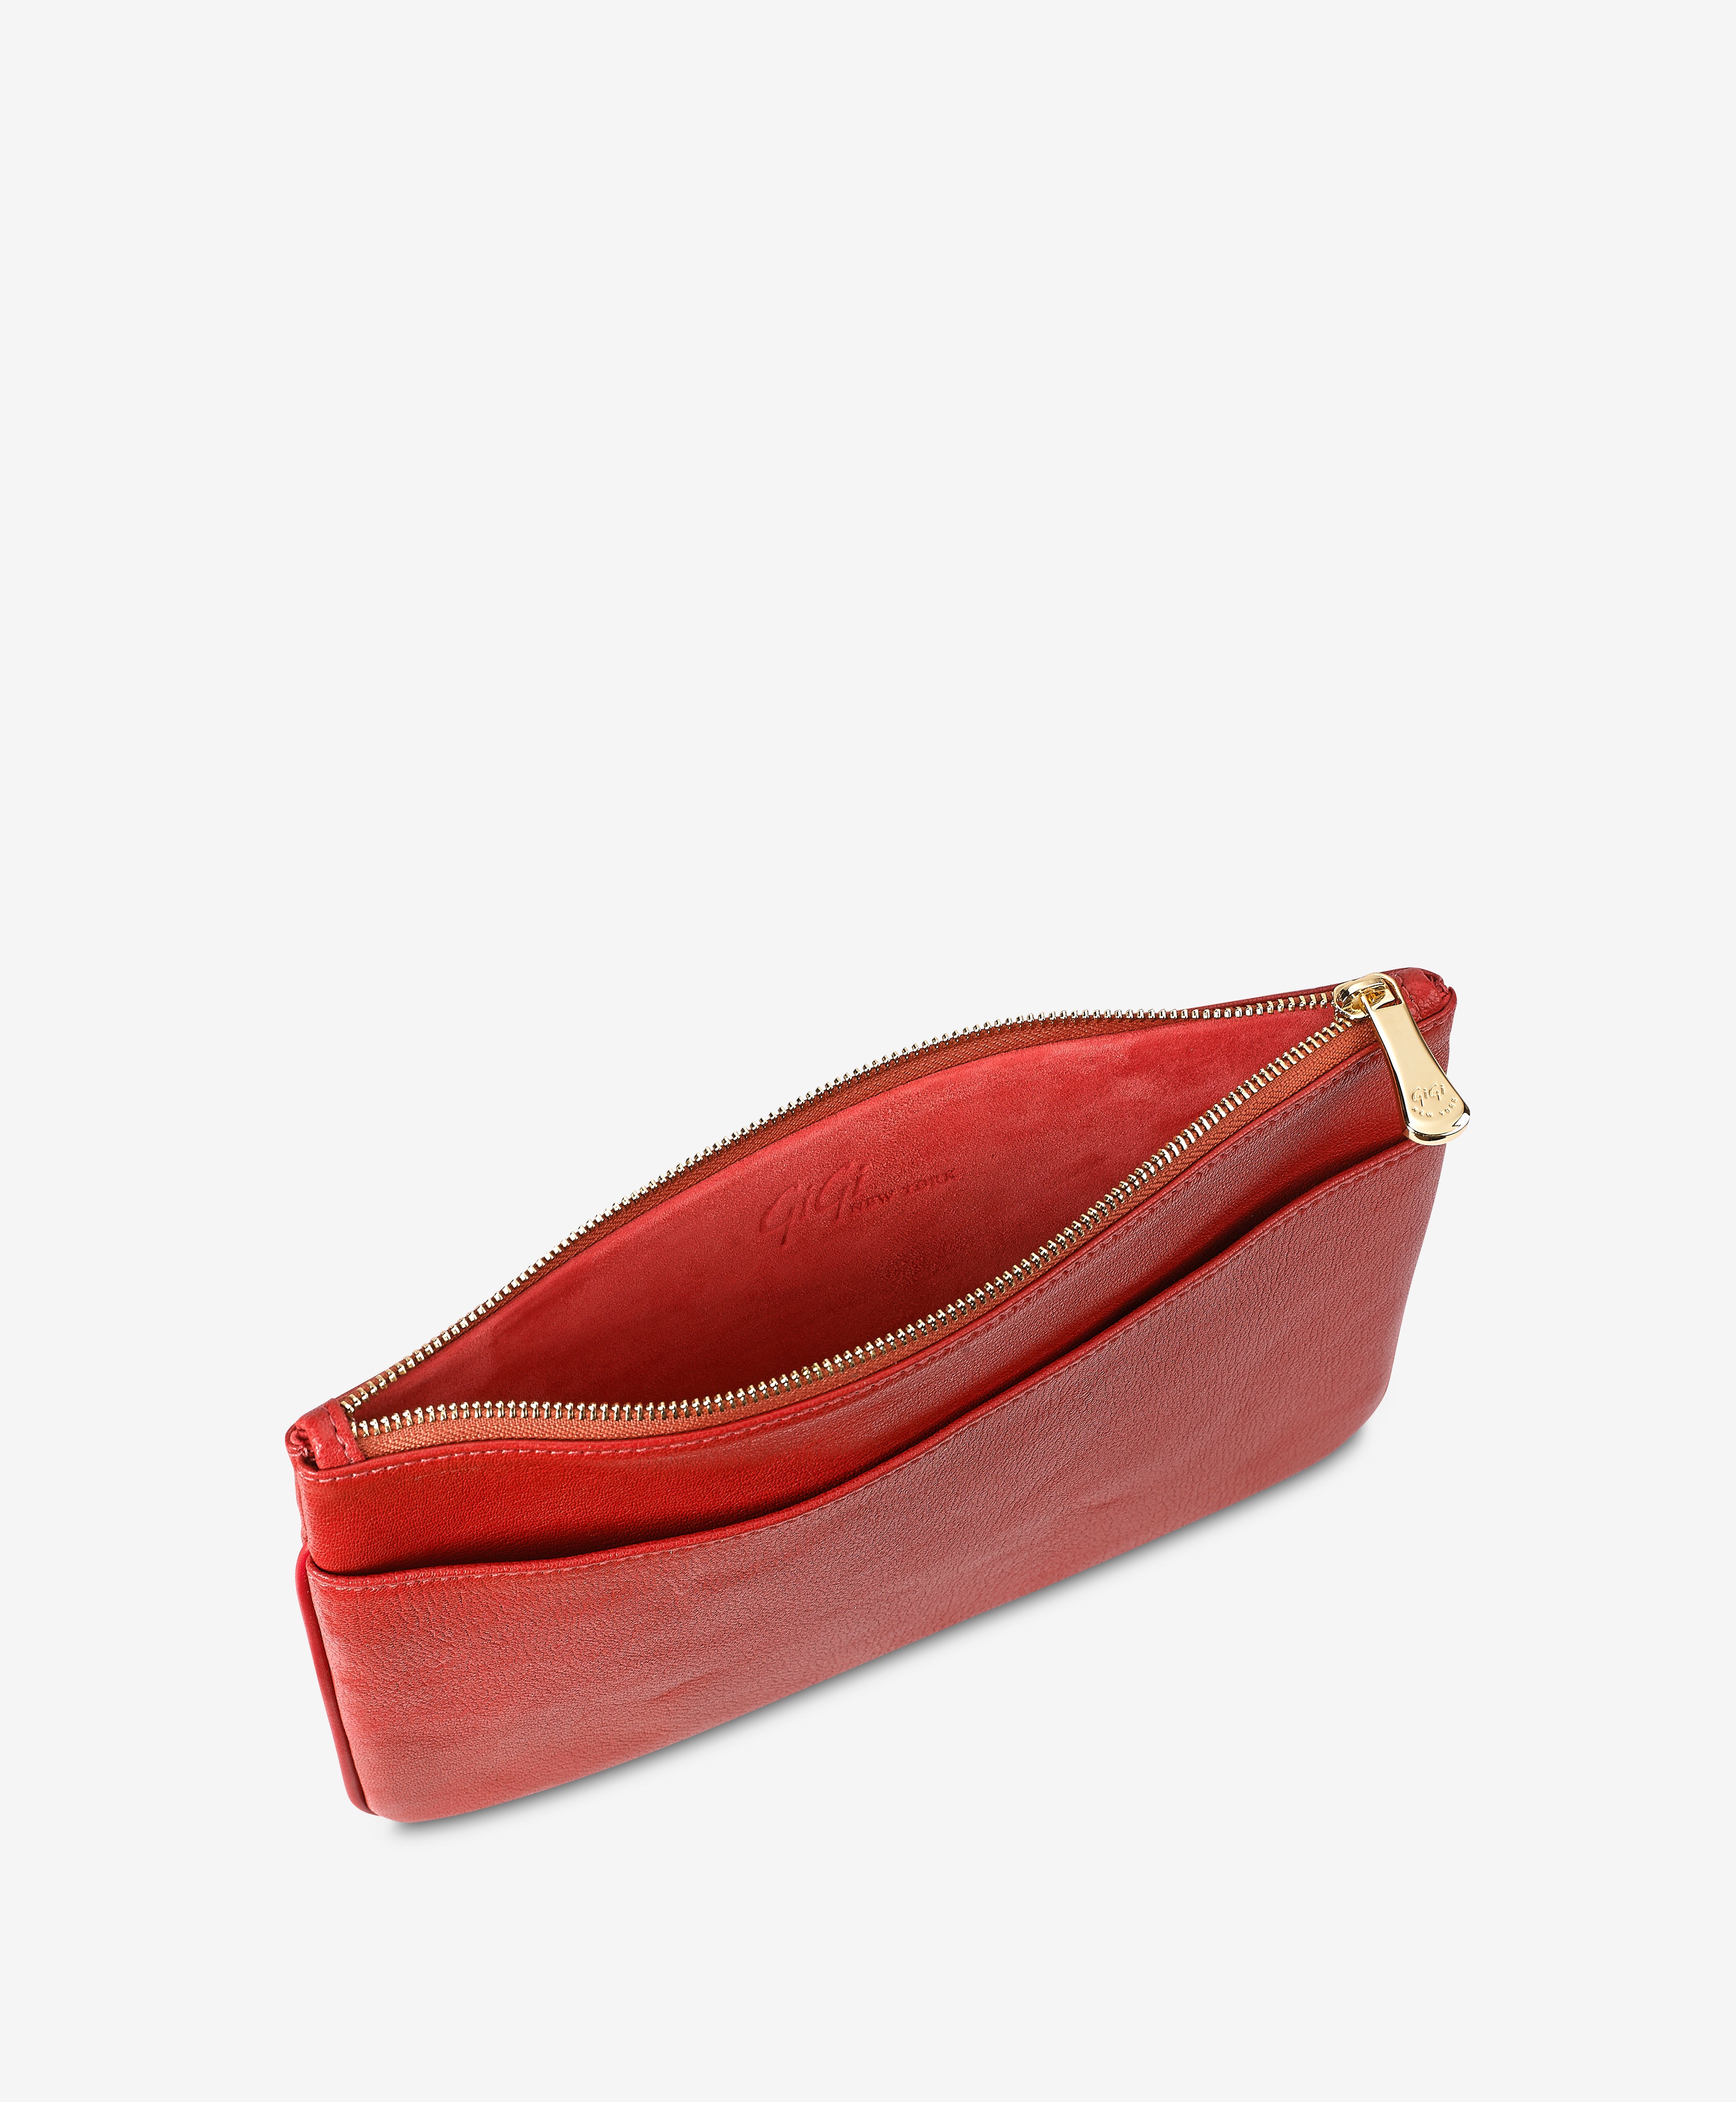 Red Bag with Pockets TOSCA Women - EQUITAGO Shop online